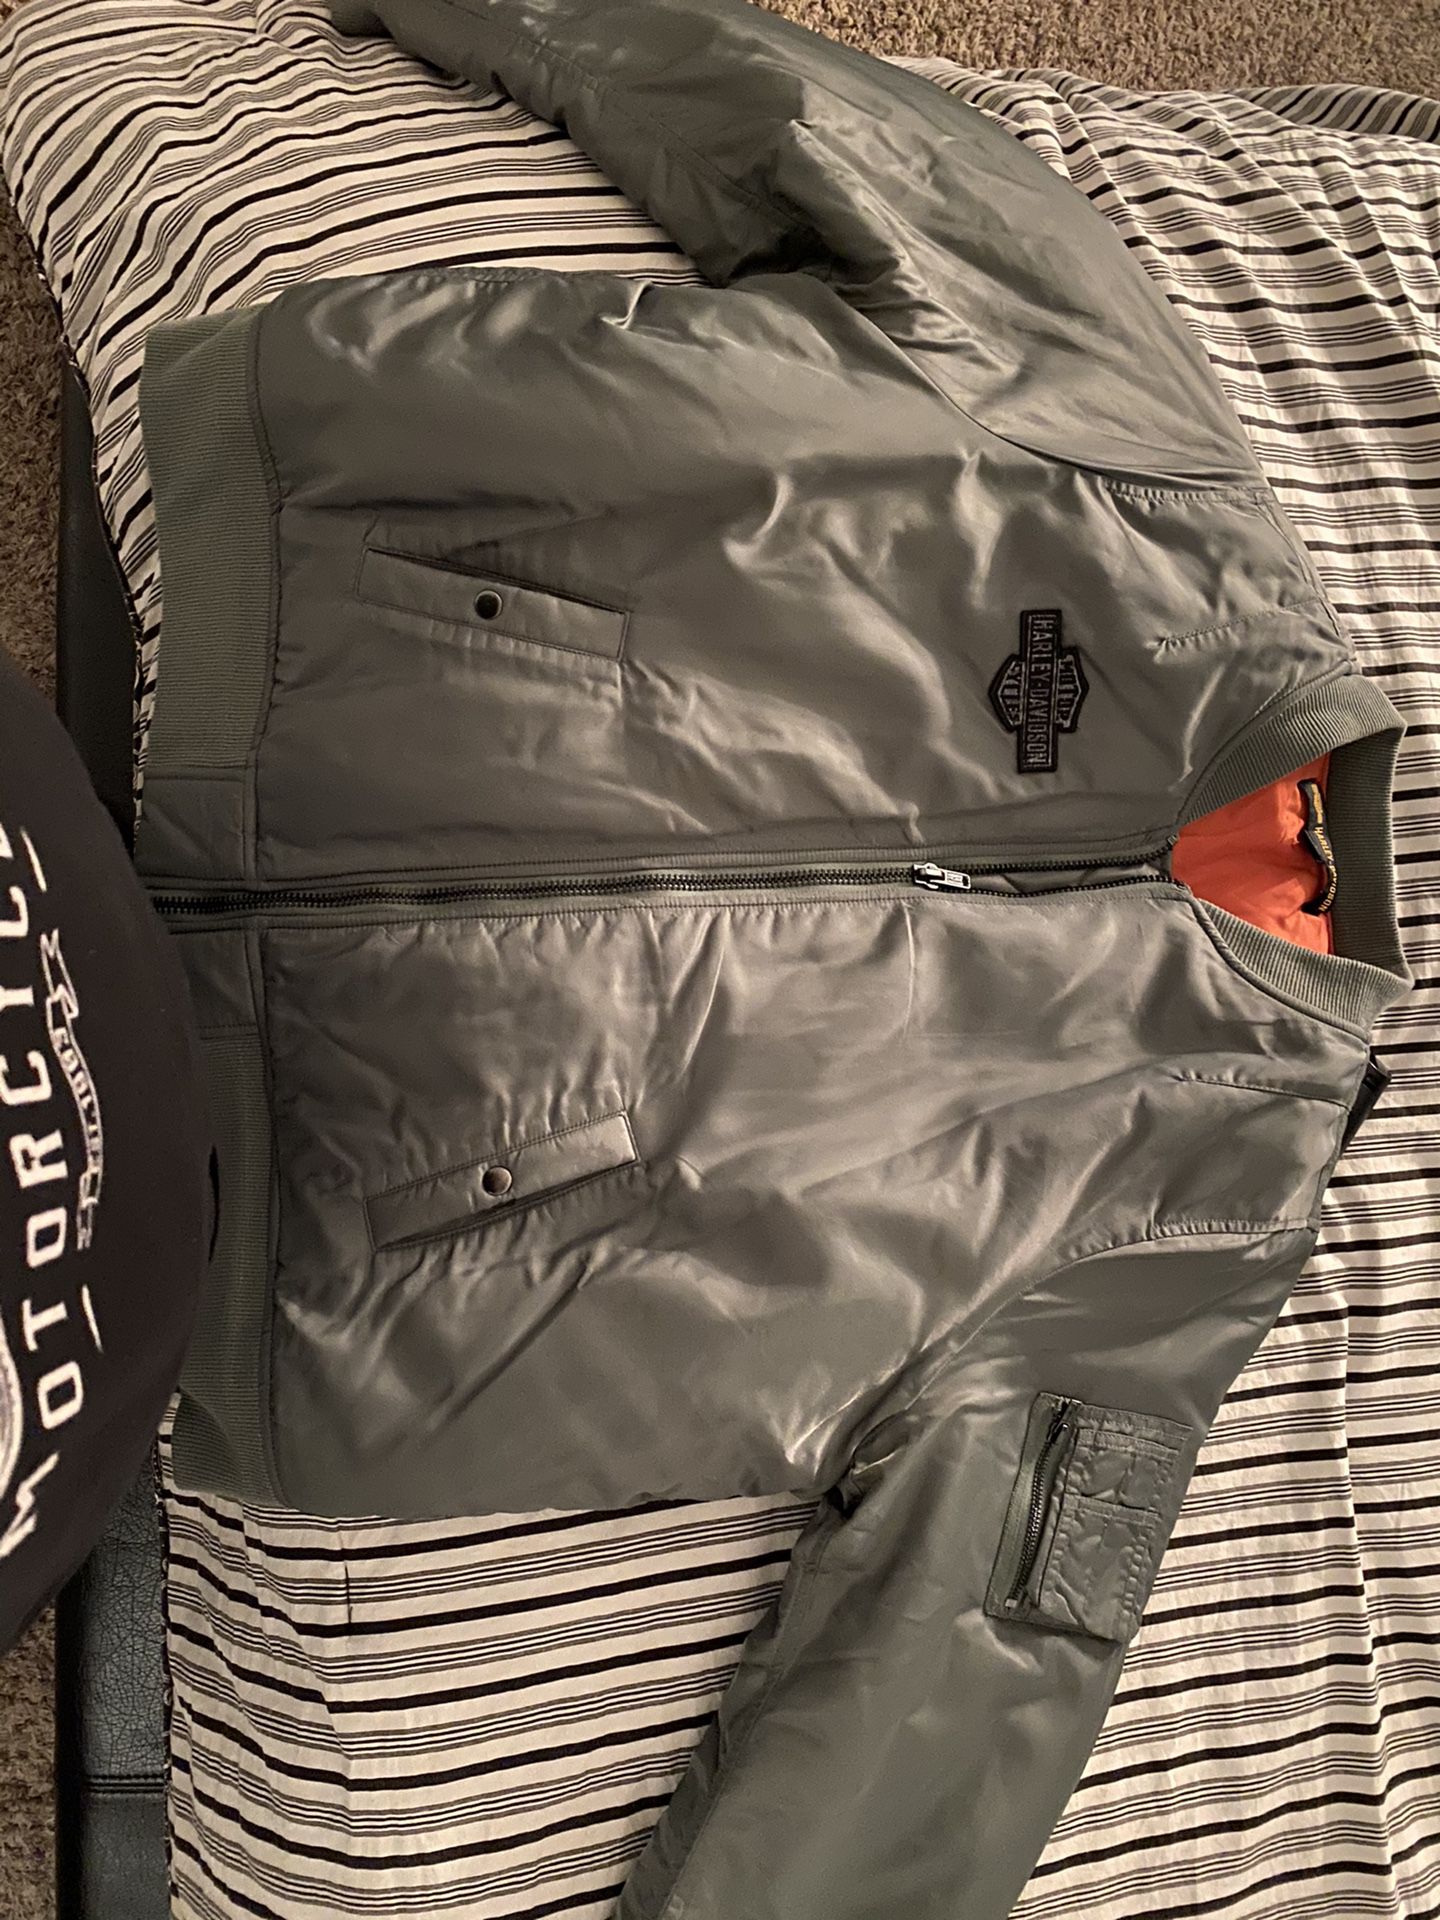 Harley-Davidson bomber jacket 3w